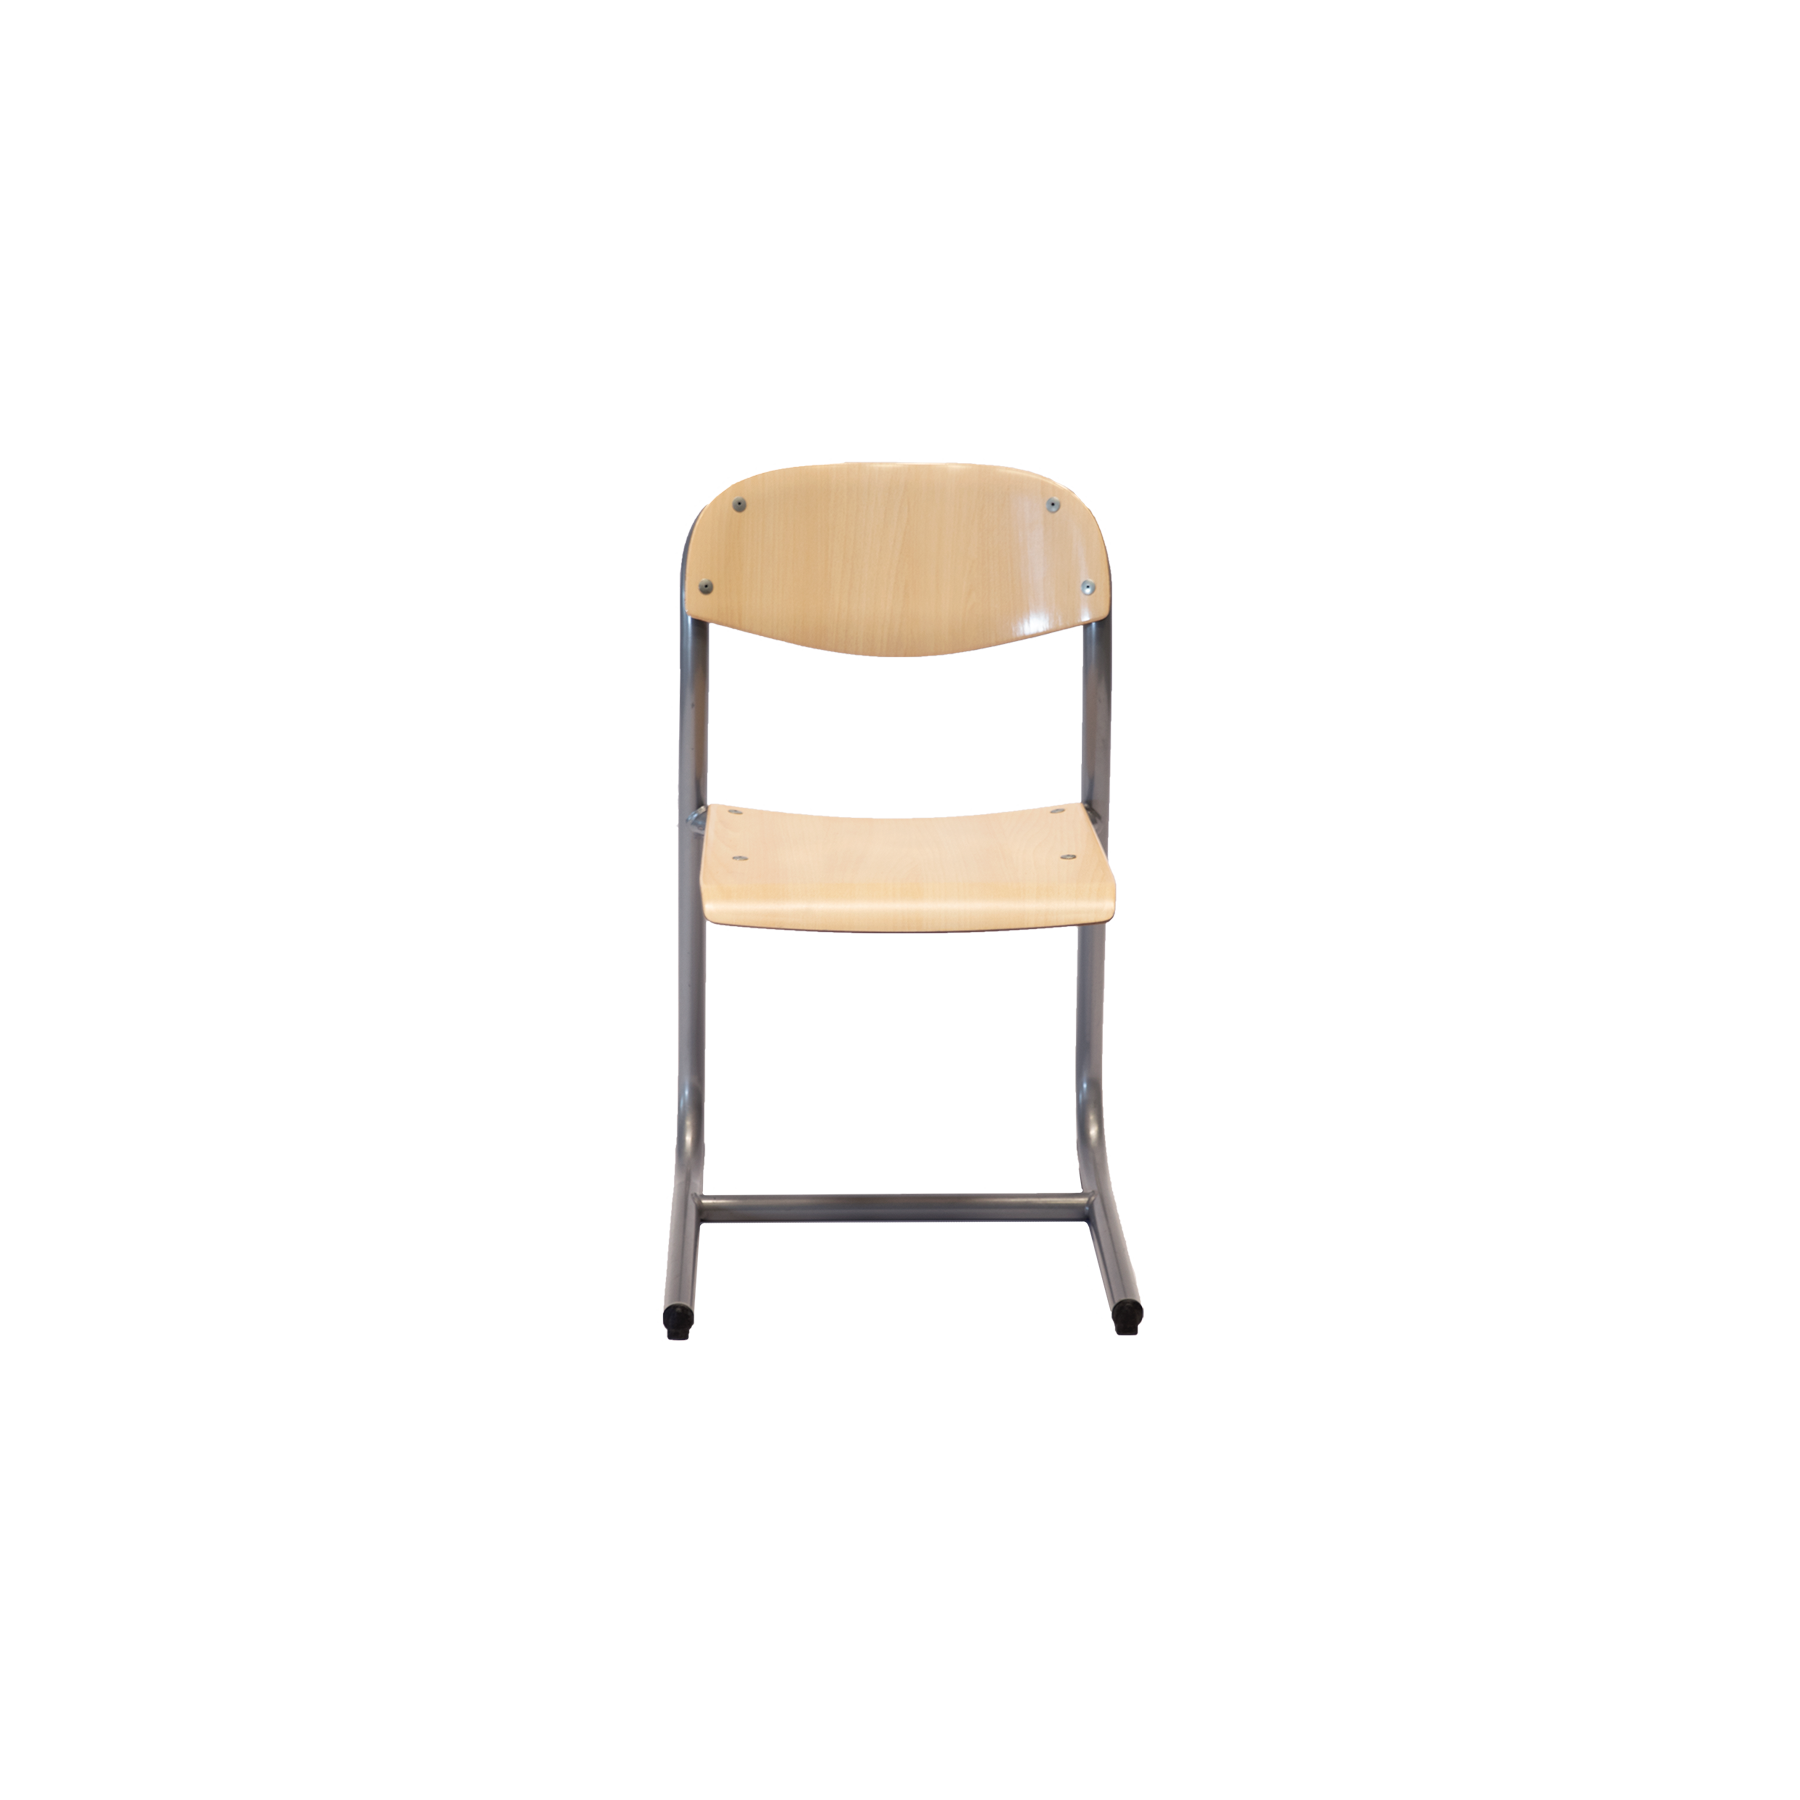 School chair A450